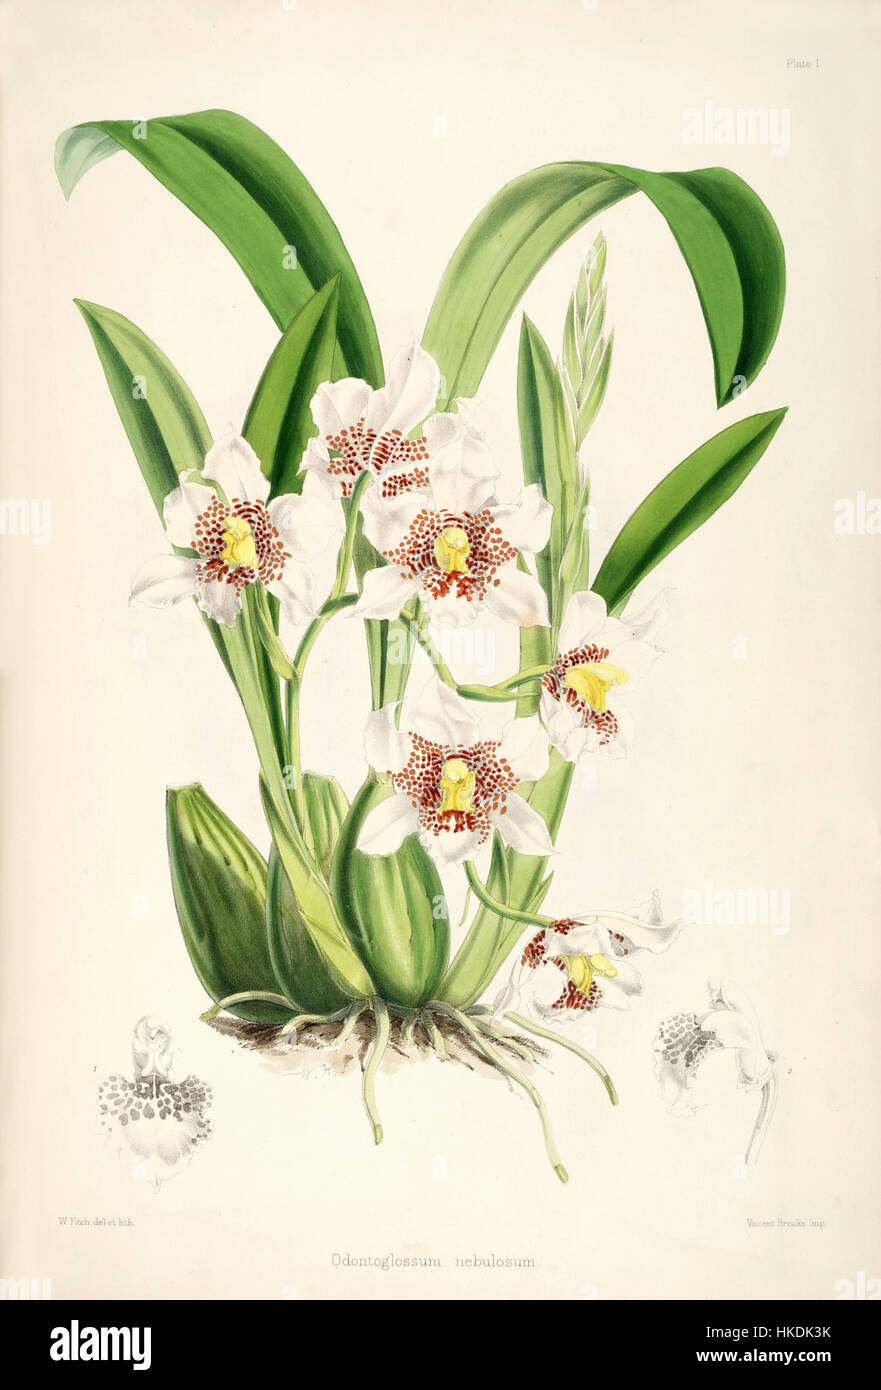 Rhynchostele aptera (as Odontoglossum nebulosum)   pl. 1   Bateman   A Monograph of Odontoglossum Stock Photo